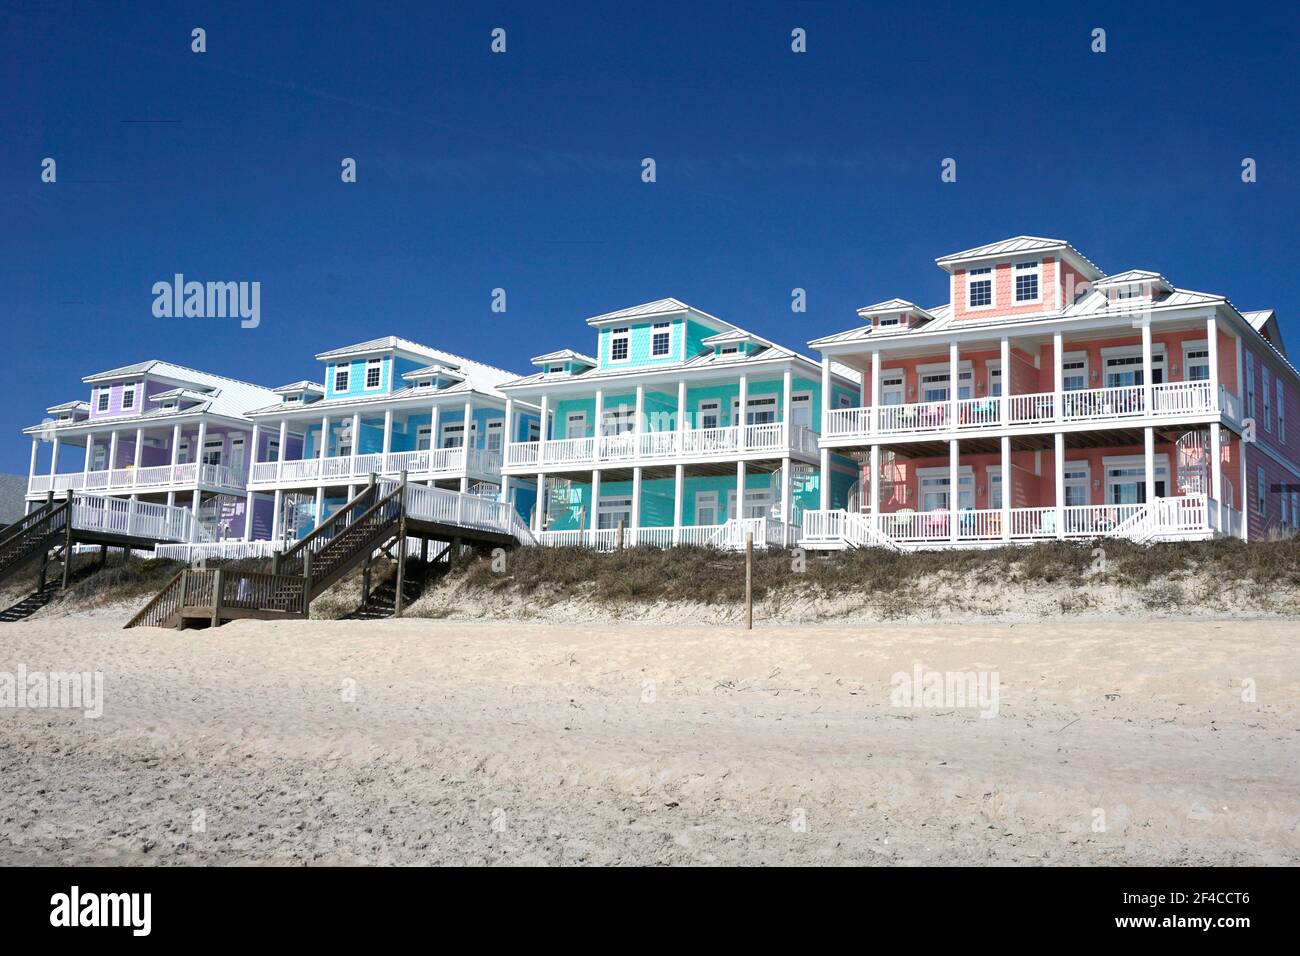 Row of multicolored beach houses Stock Photo